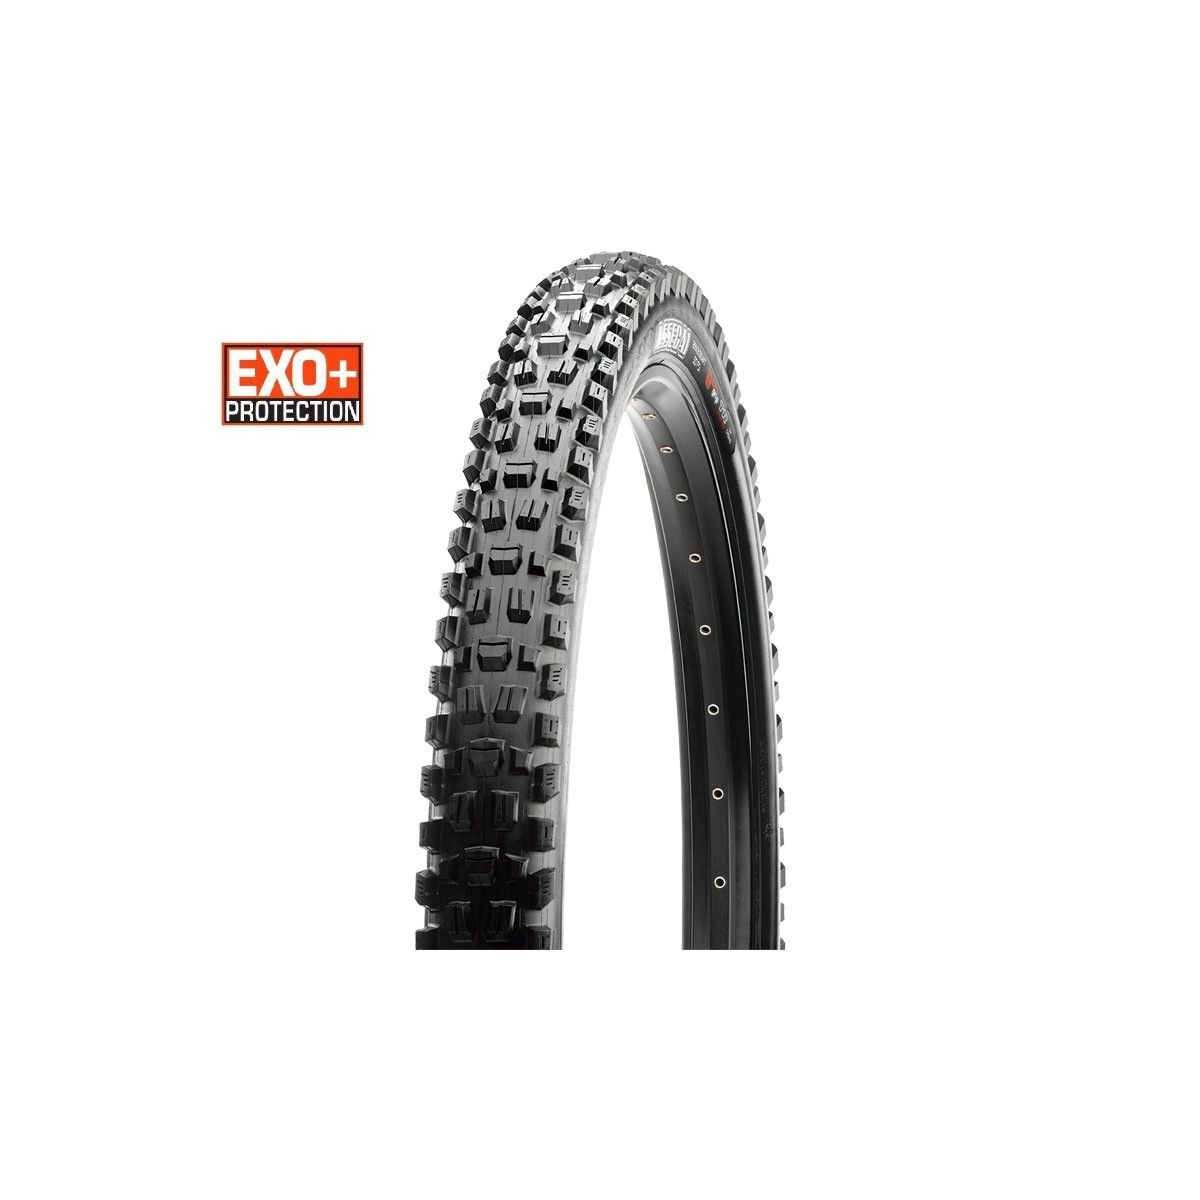 Cubiertas Maxxis Assegai 29x2.50WT 3c MaxxTerra EXO+ TR | Neumáticos descenso | ETB00172500 | the bike village | enduro